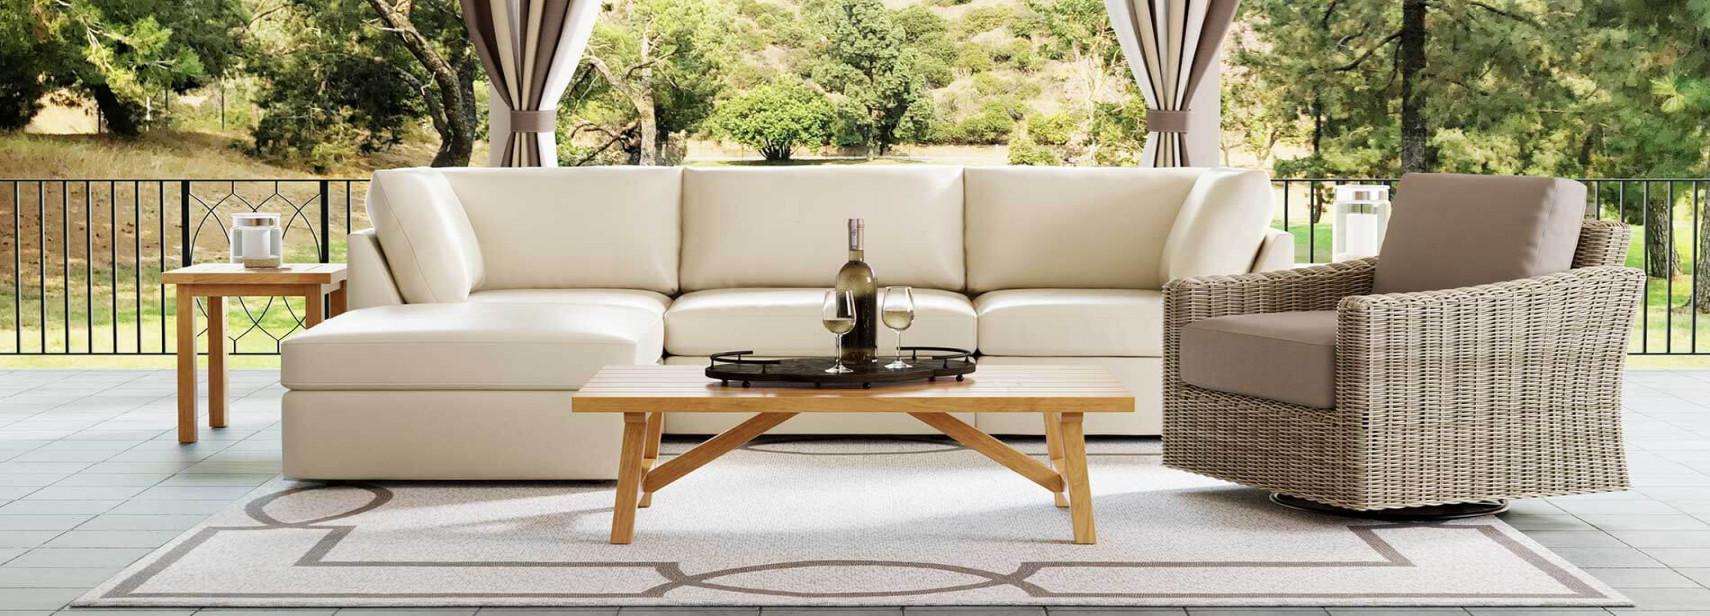 Bassett High-End & Luxury Outdoor Furniture